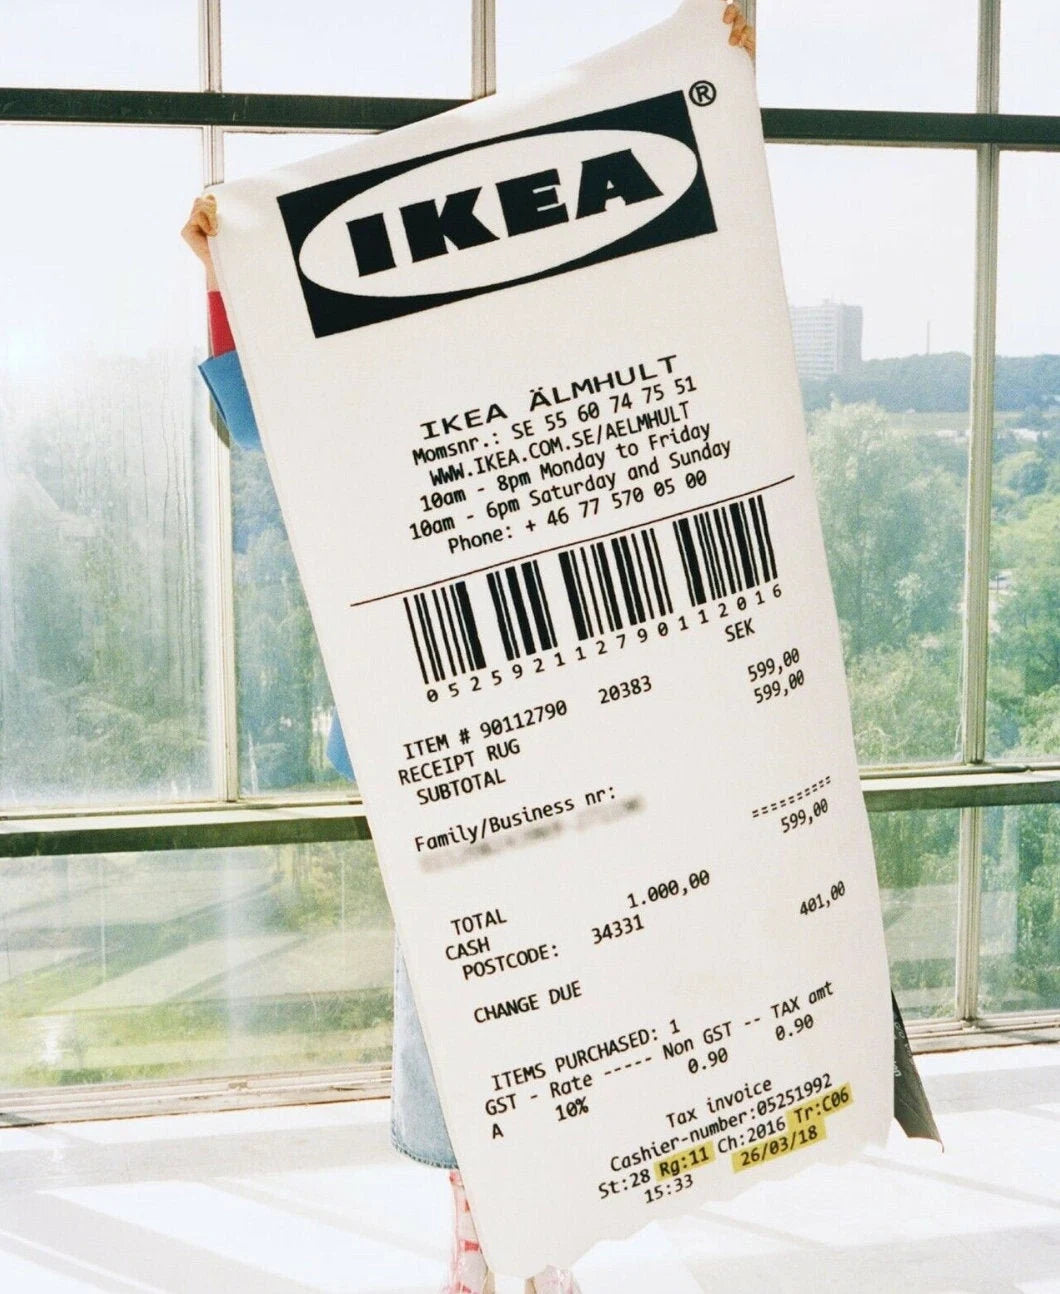 Virgil Abloh x IKEA MARKERAD Collection Closer Look